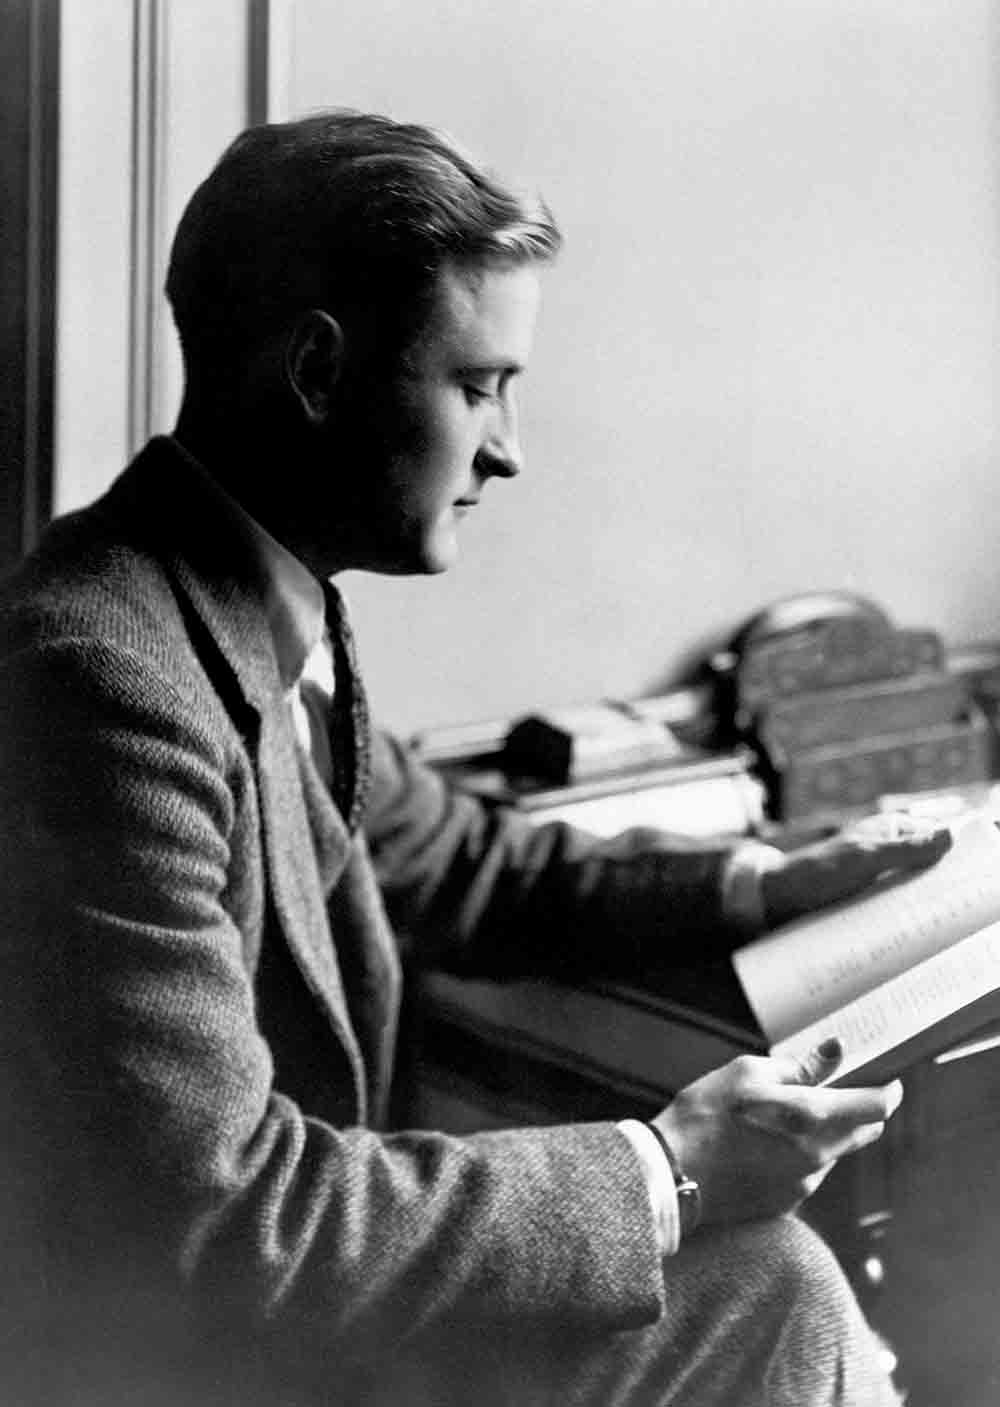 F Scott Fitzgerald photograph 1920